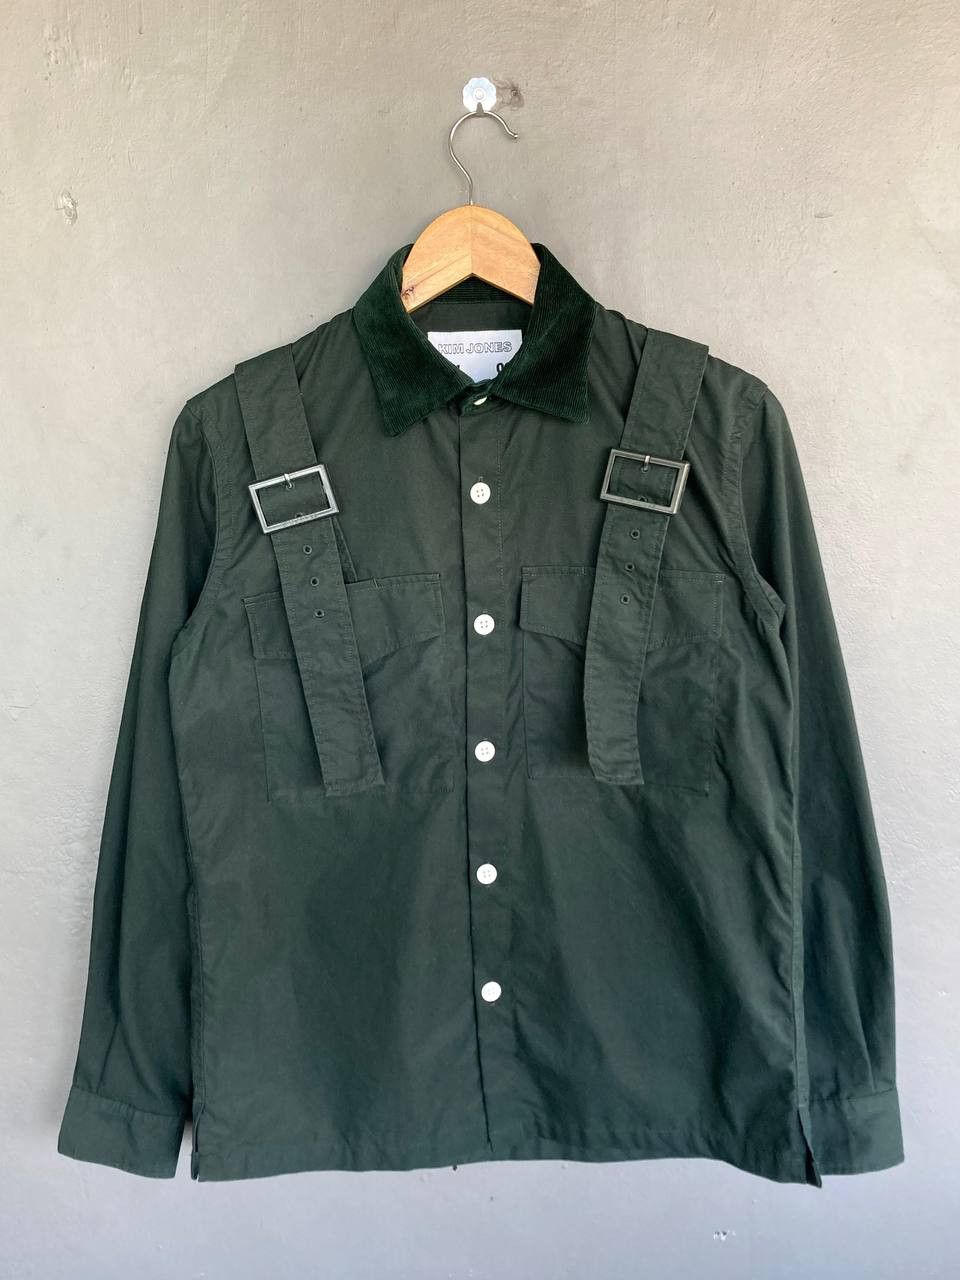 AW18 Kim Jones x GU Military Strap Buttoned Shirt - 1